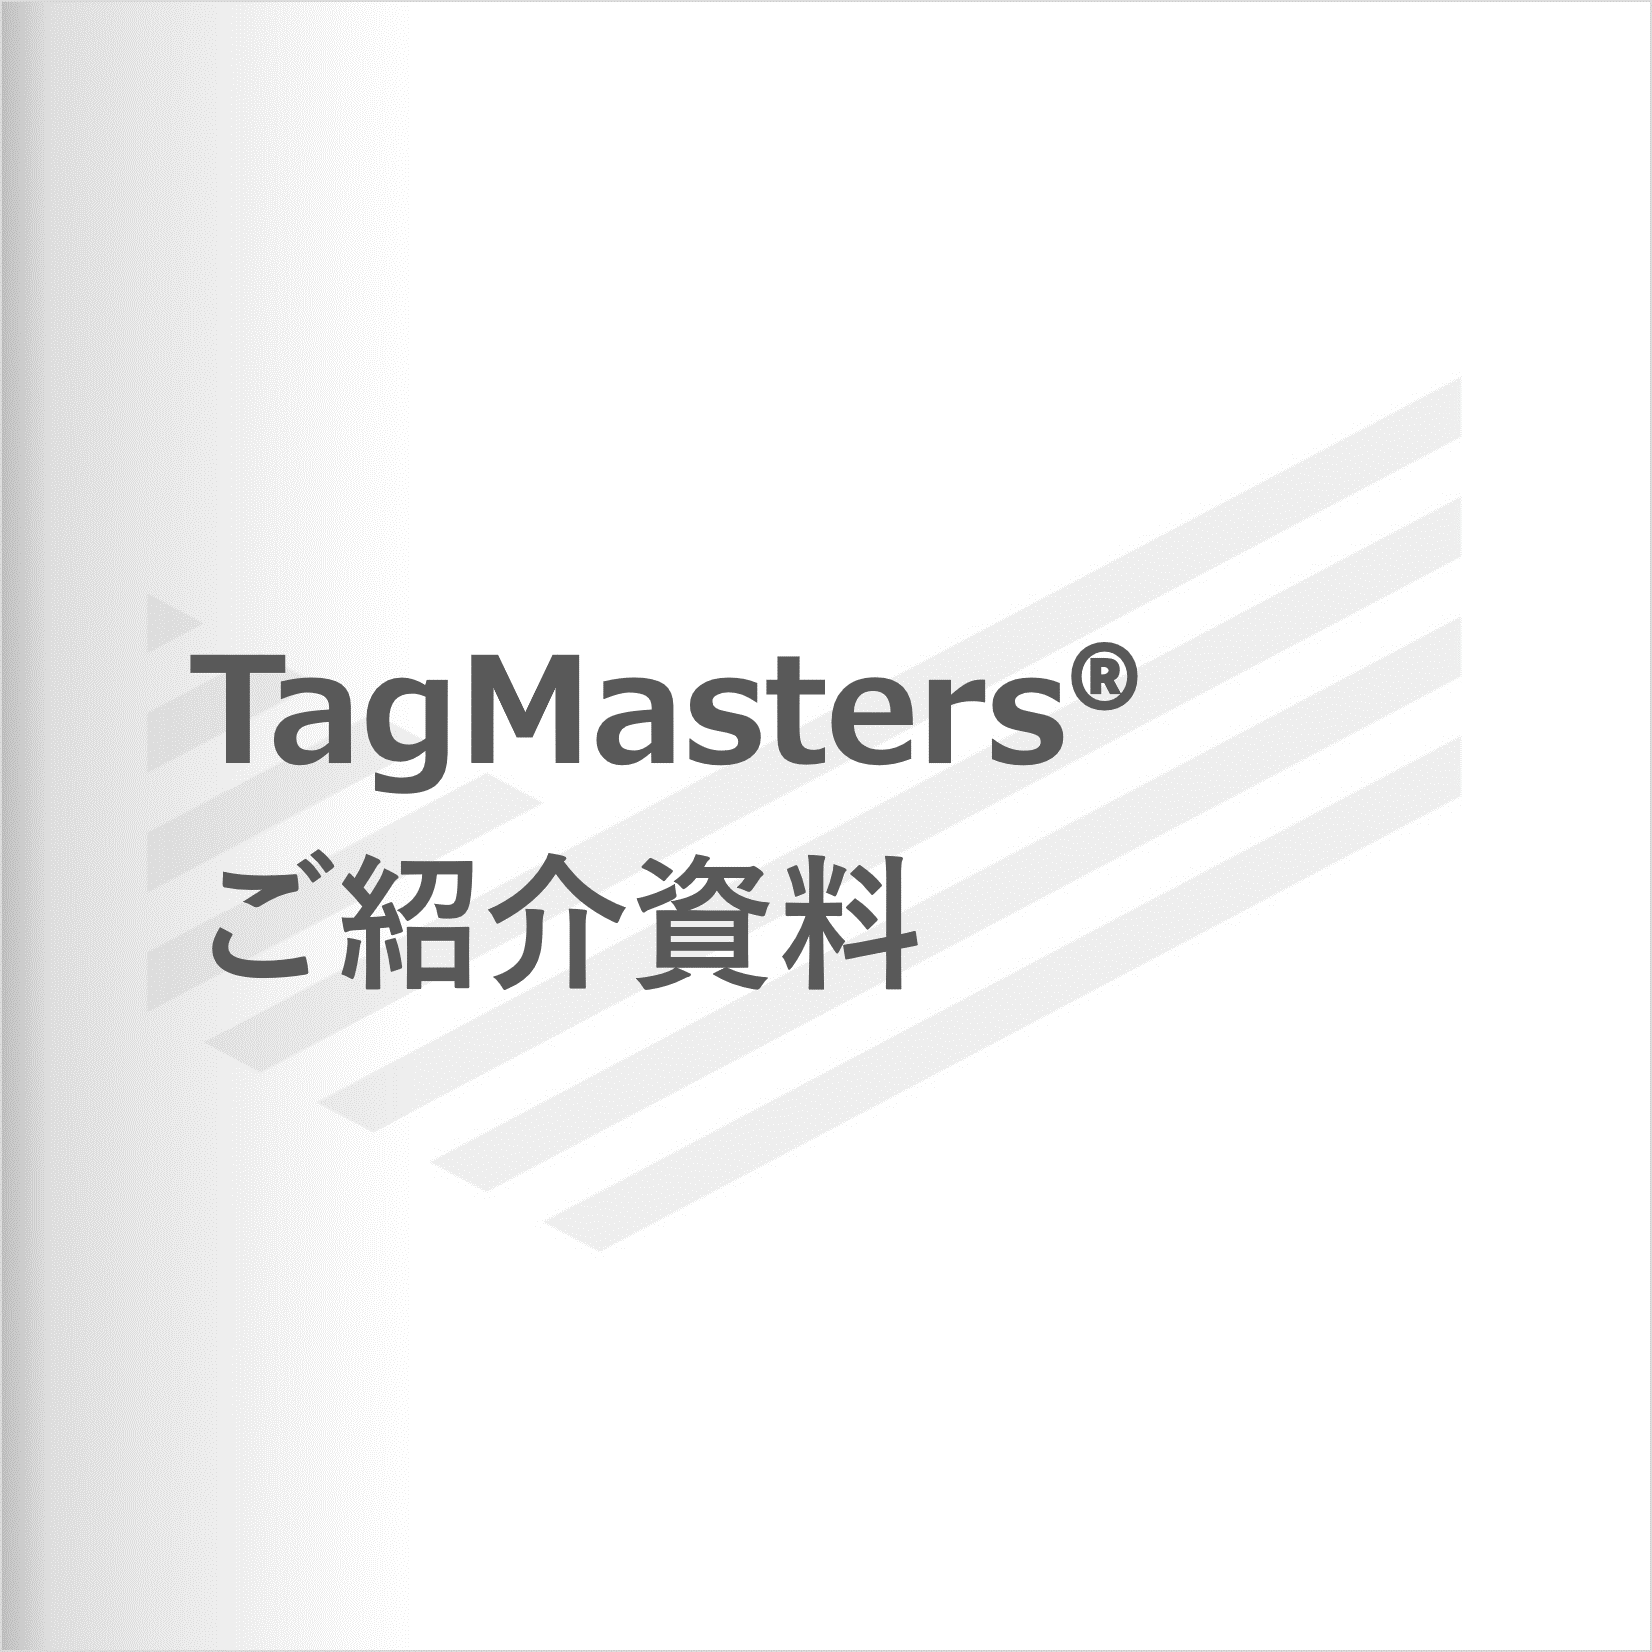 TagMasters® ご紹介資料